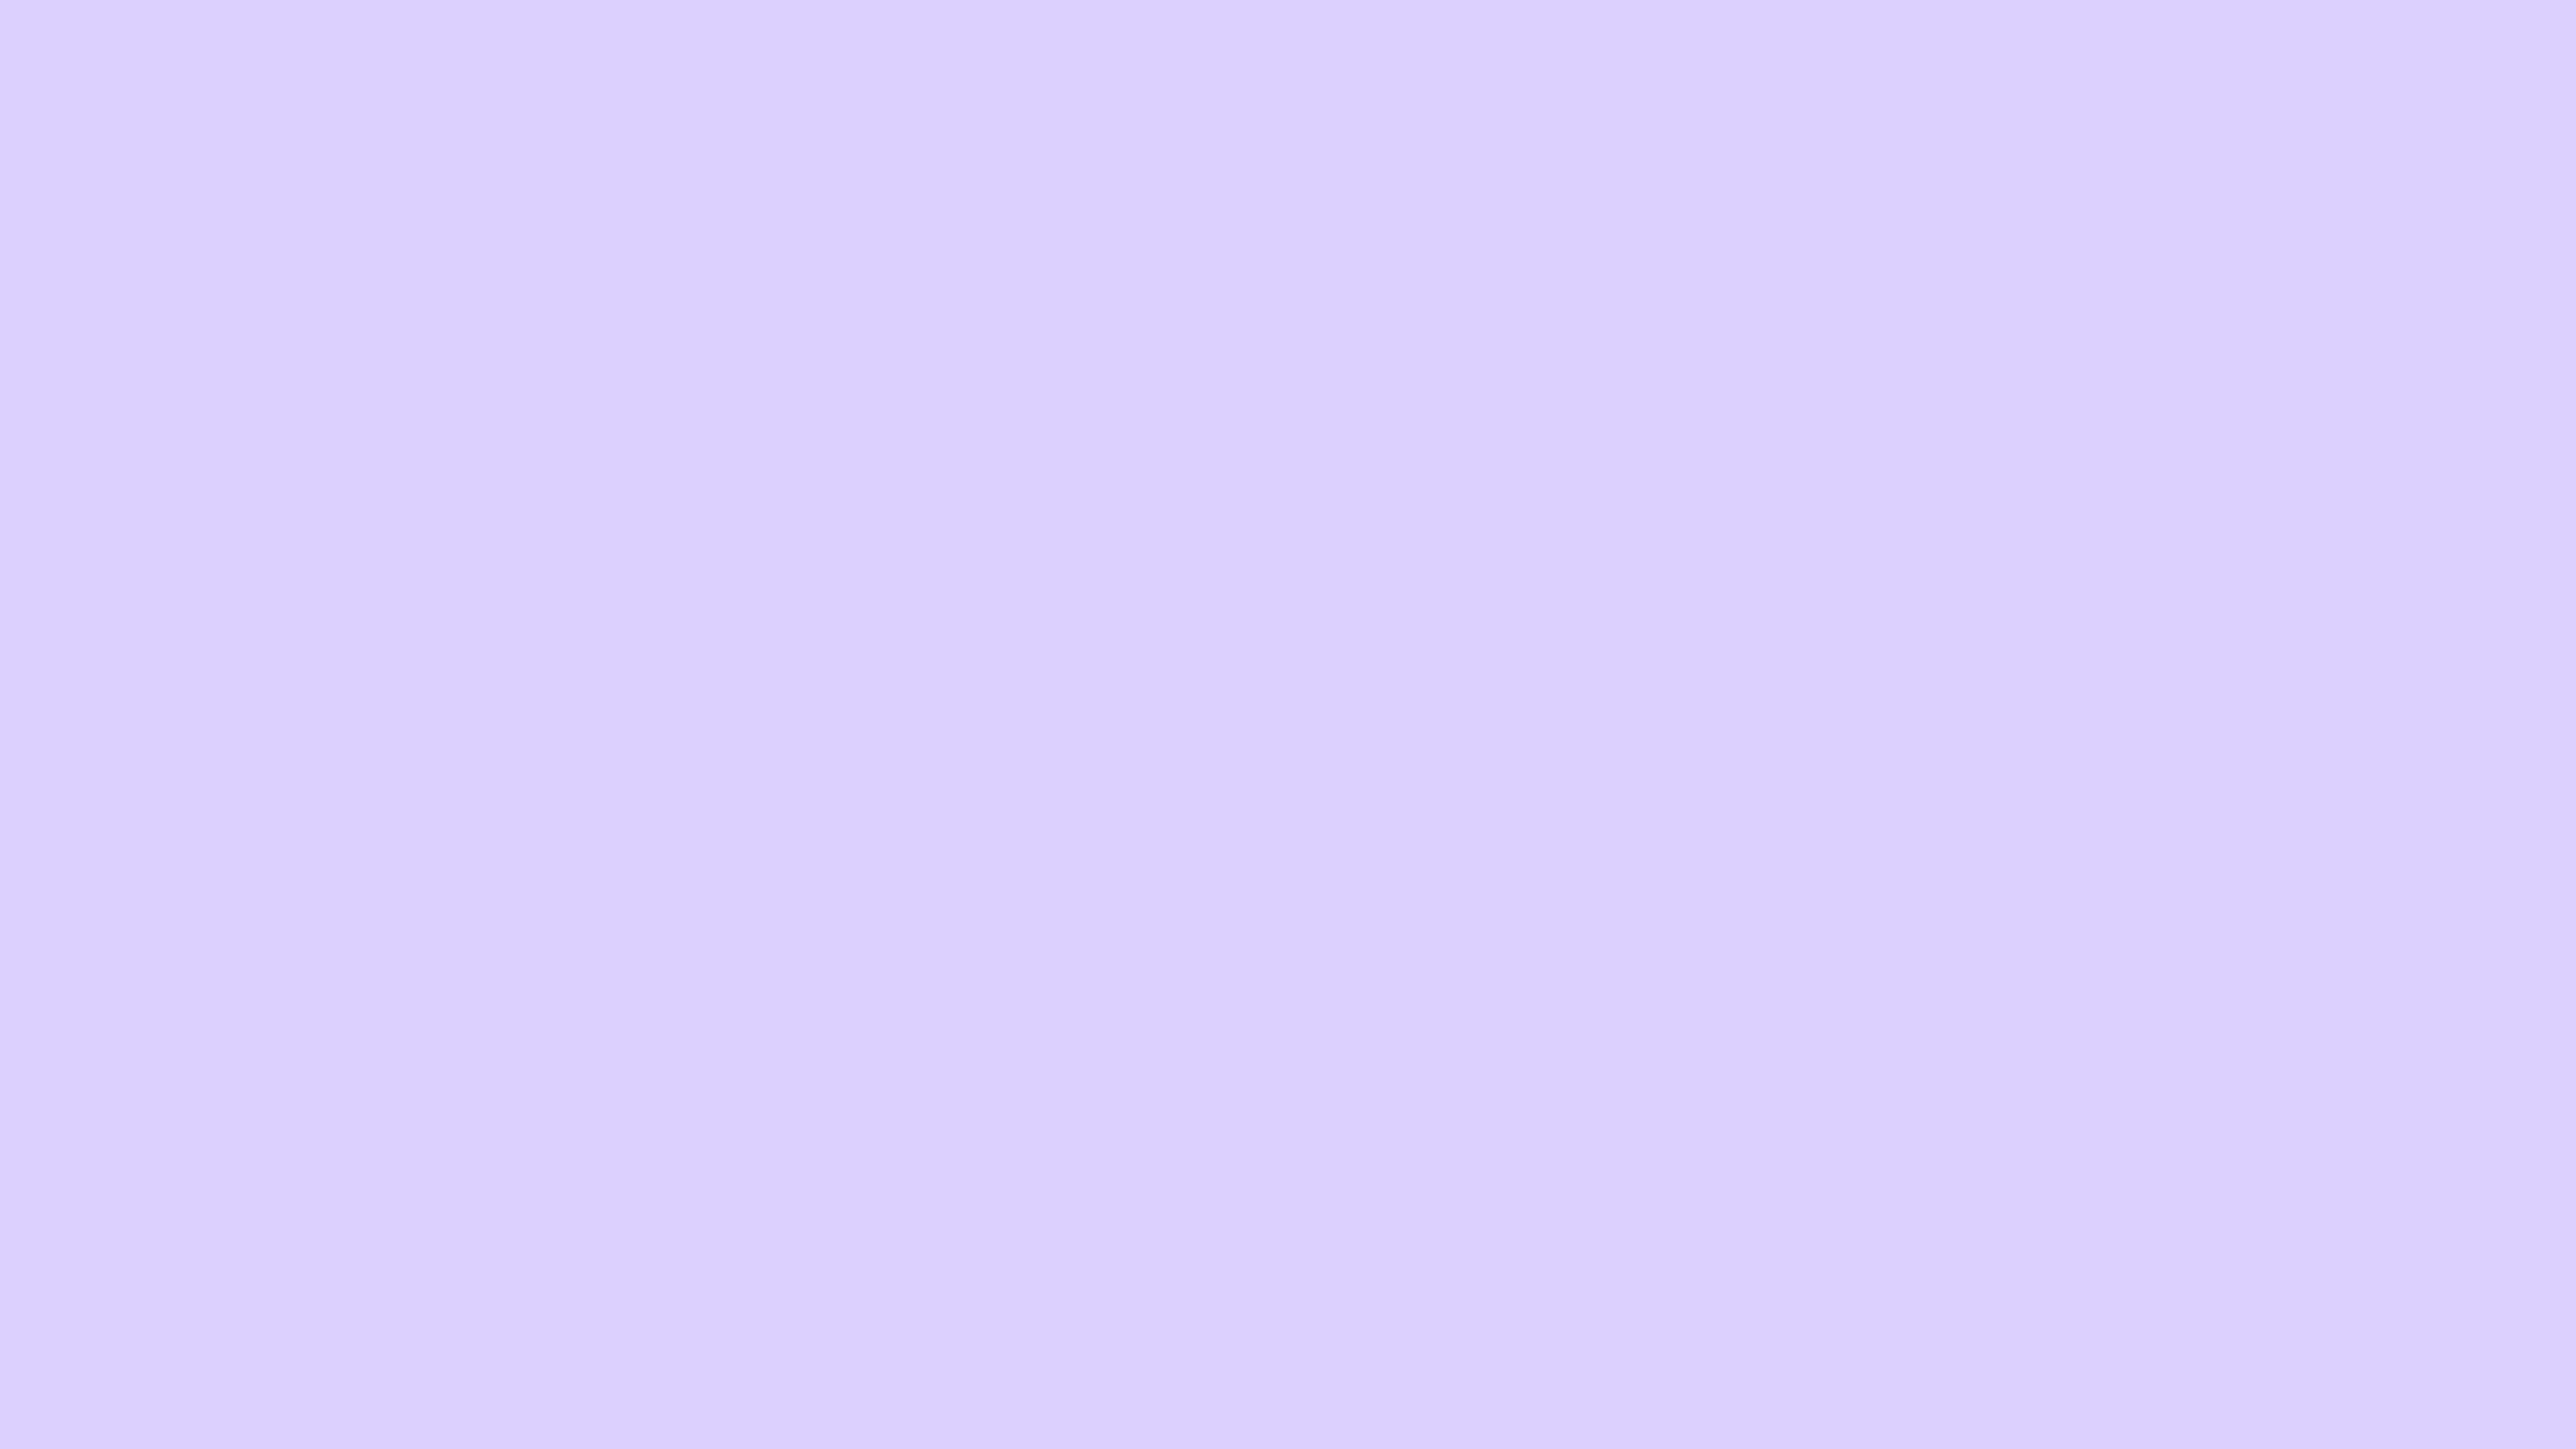 7680x4320 Pale Lavender Solid Color Background